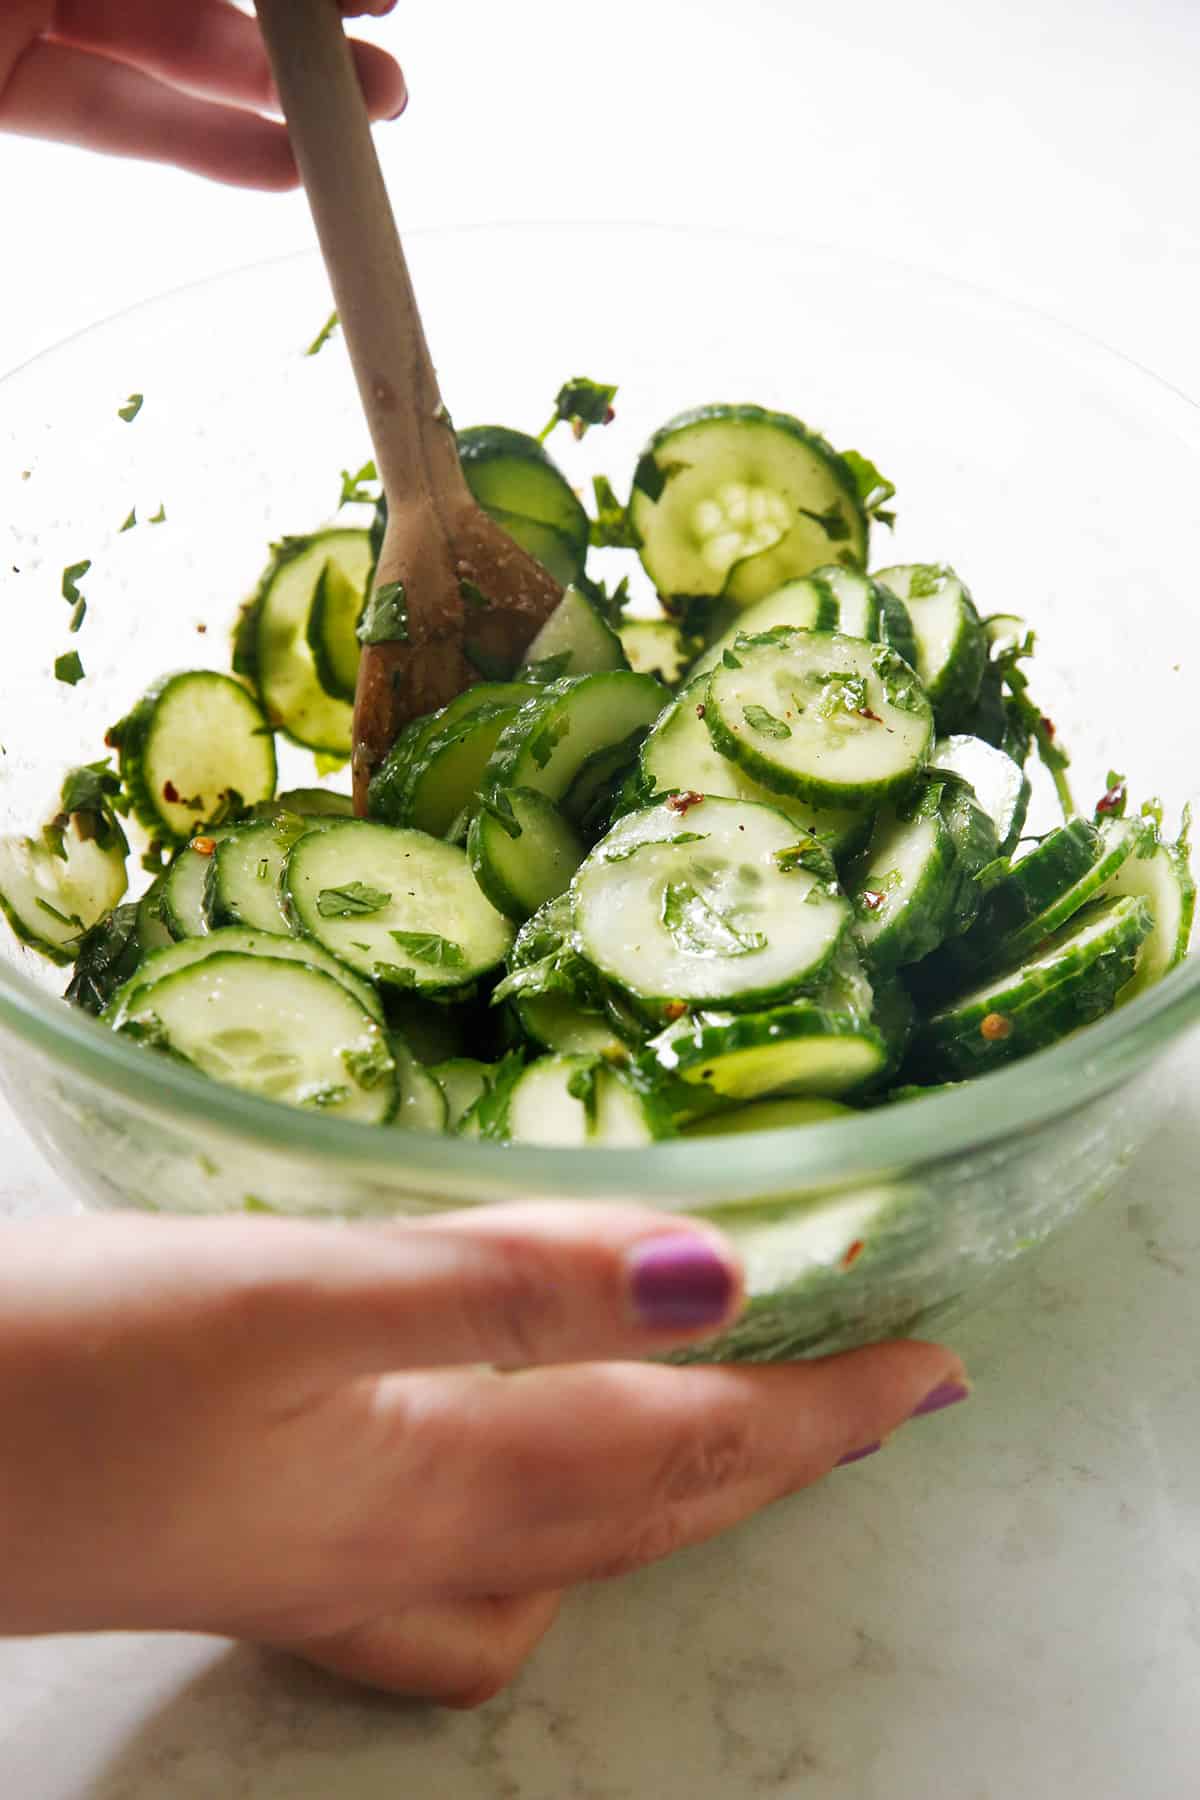 Ready to eat cucumber salad recipe